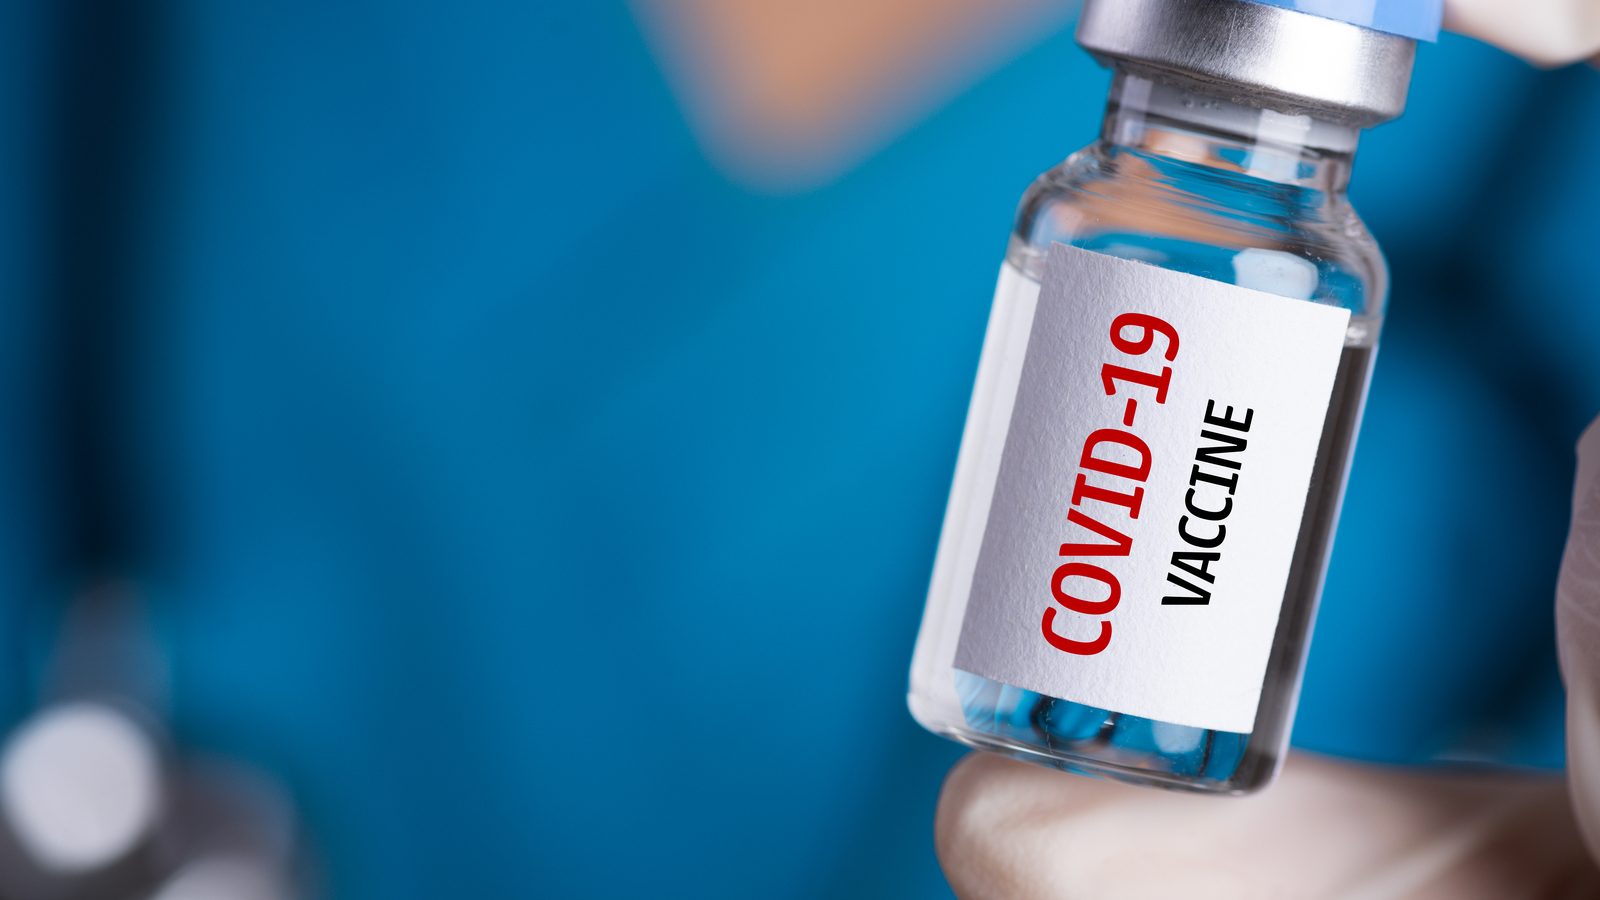 COVID-19 Vaccine Registration Information & Links